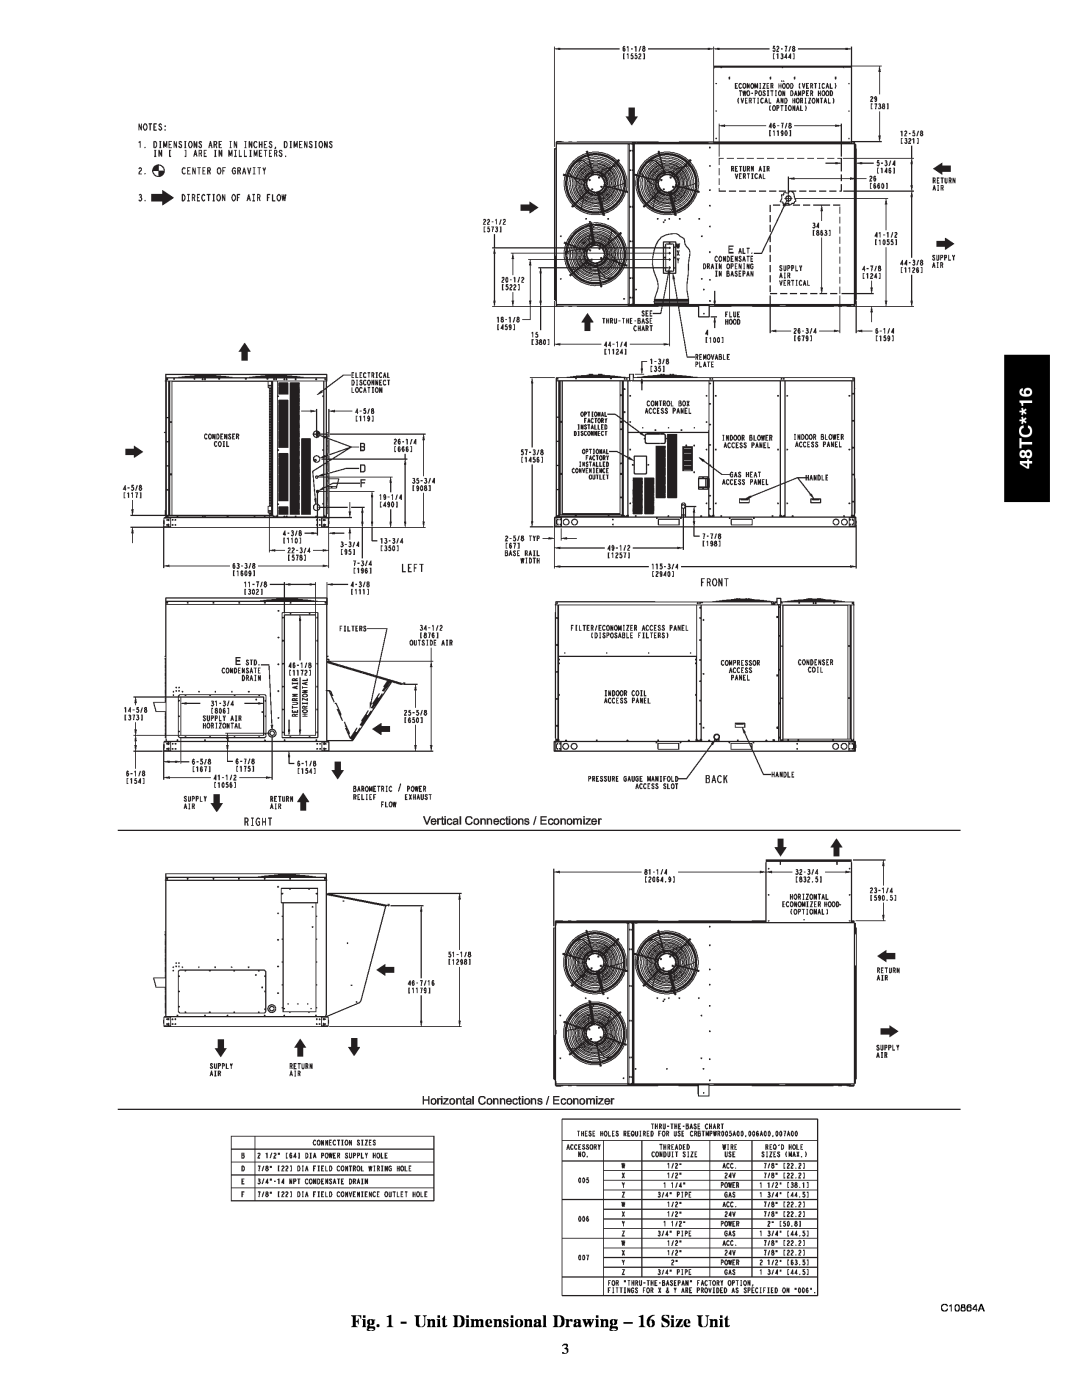 Carrier 48TC**16 installation instructions Unit Dimensional Drawing – 16 Size Unit, Vertical Connections / Economizer 